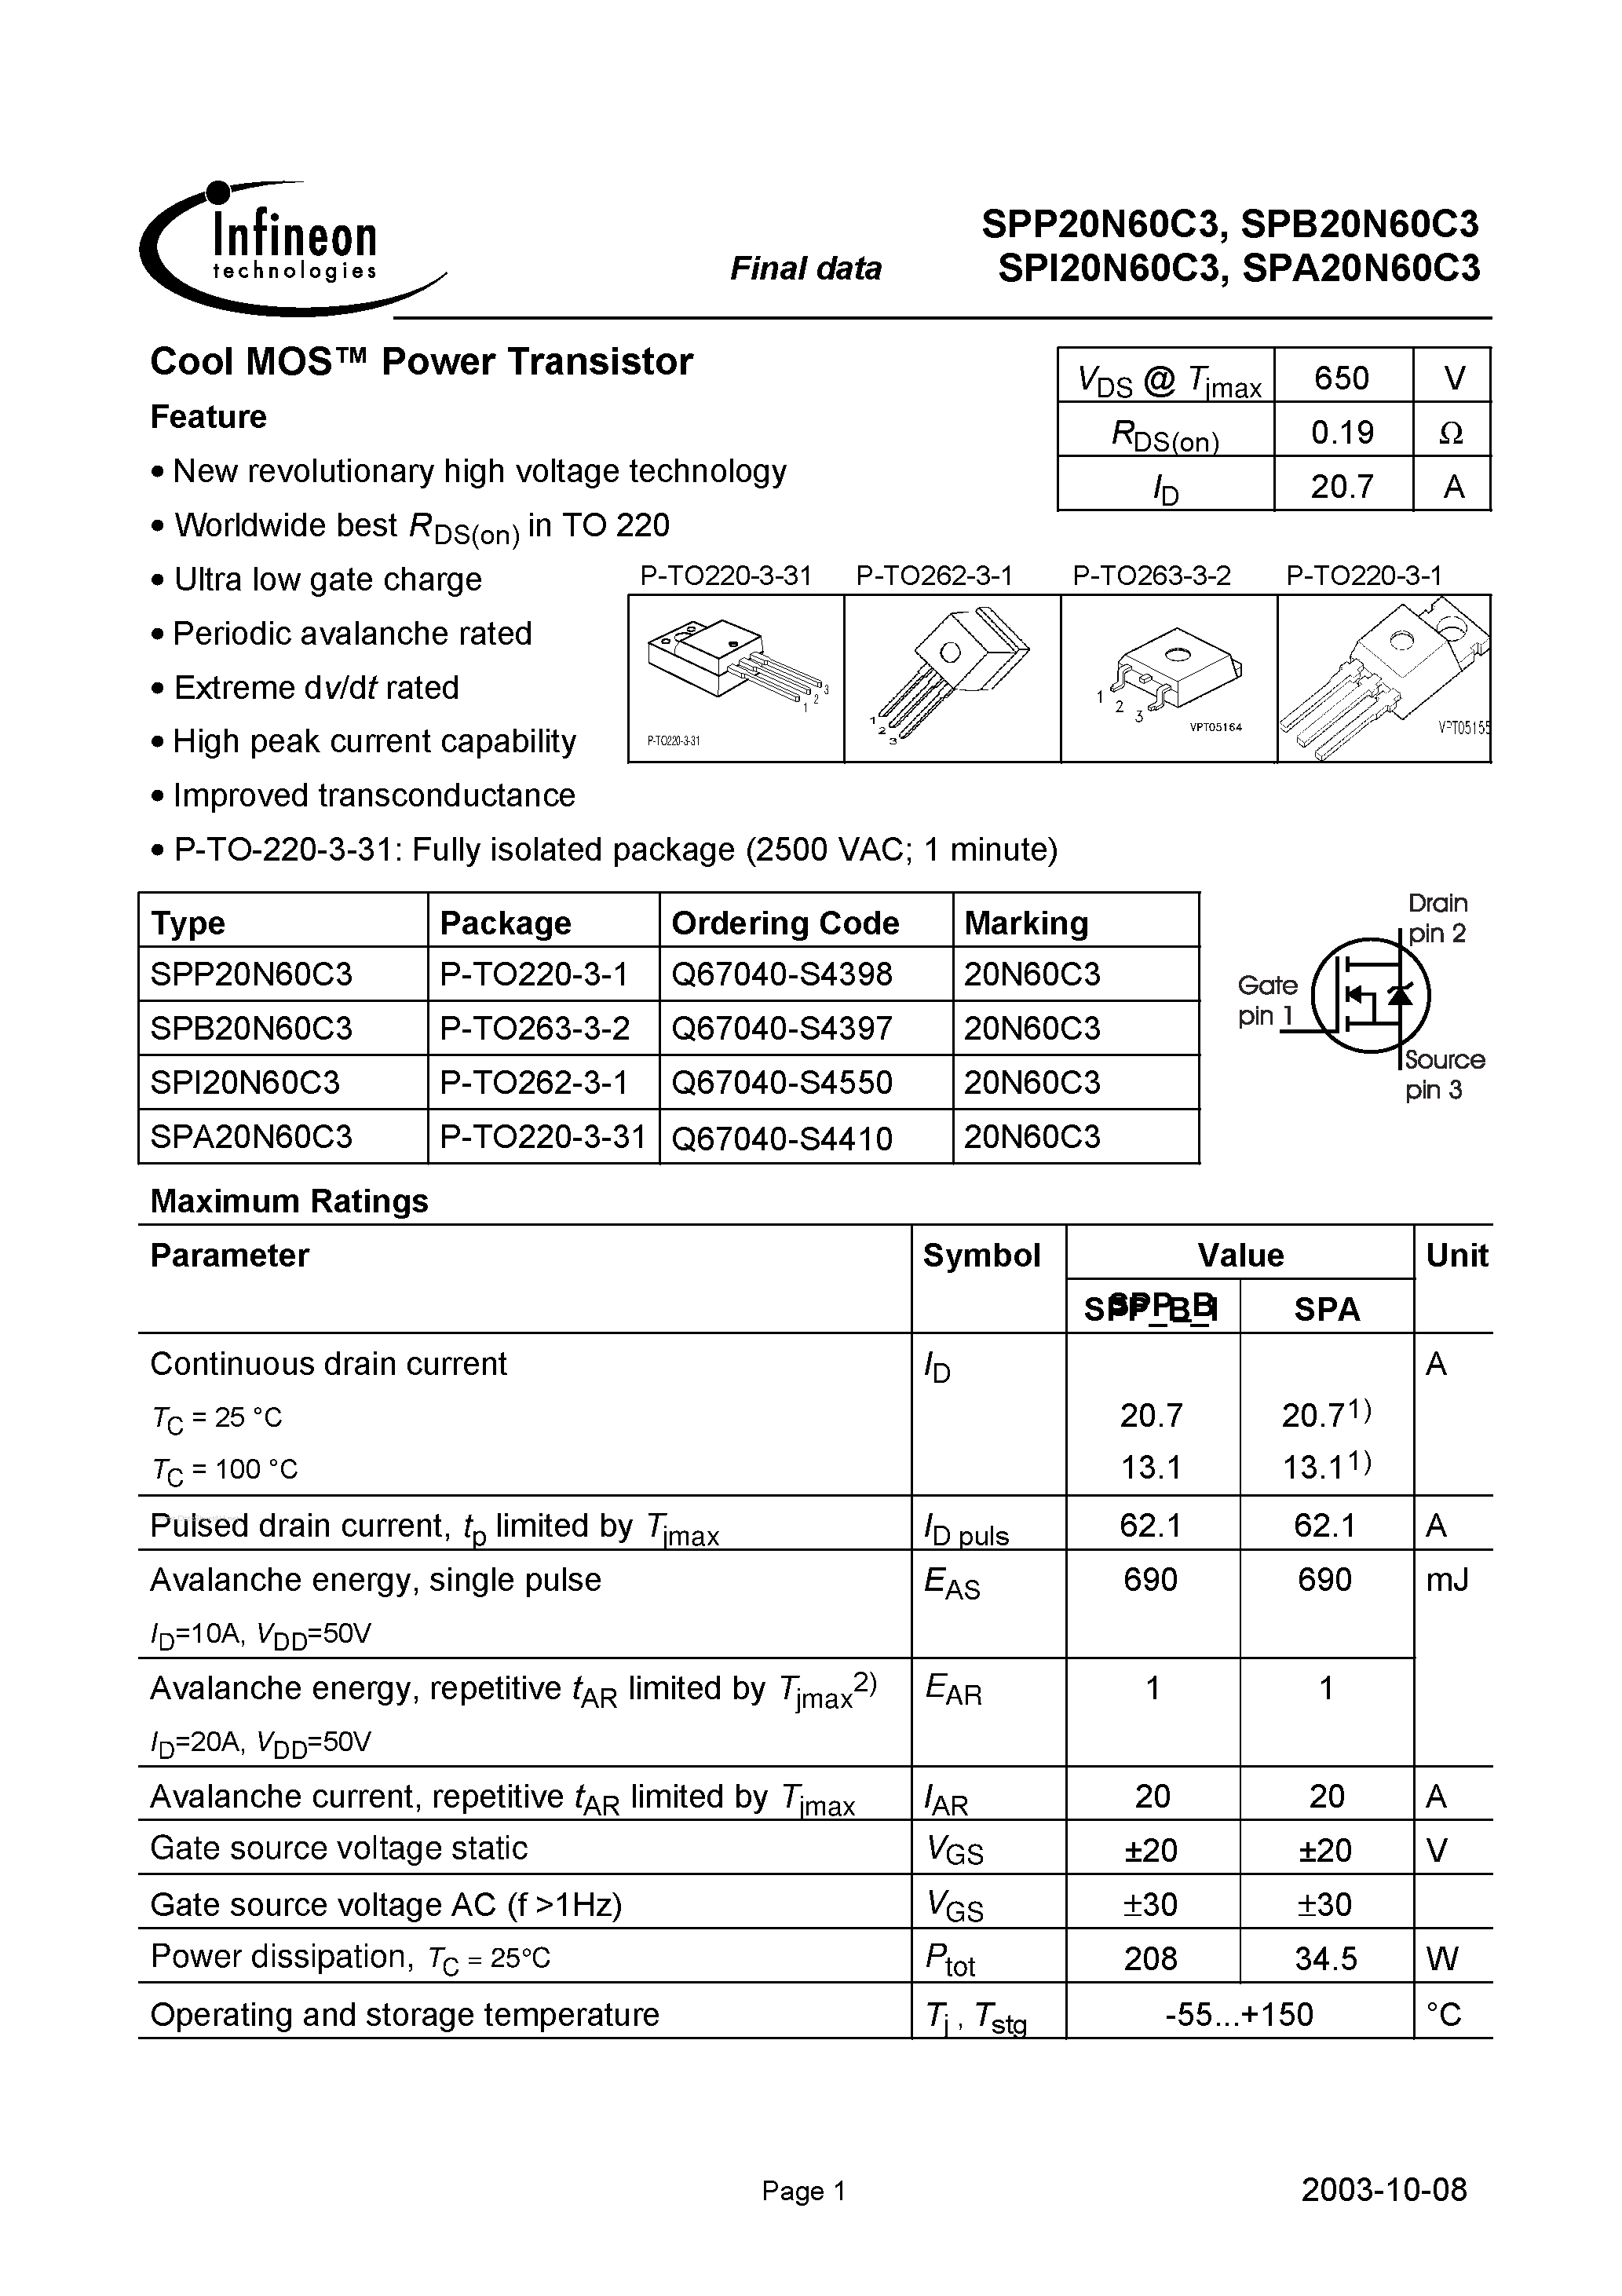 Datasheet SPI20N60C3 - Cool MOS Power Transistor page 1